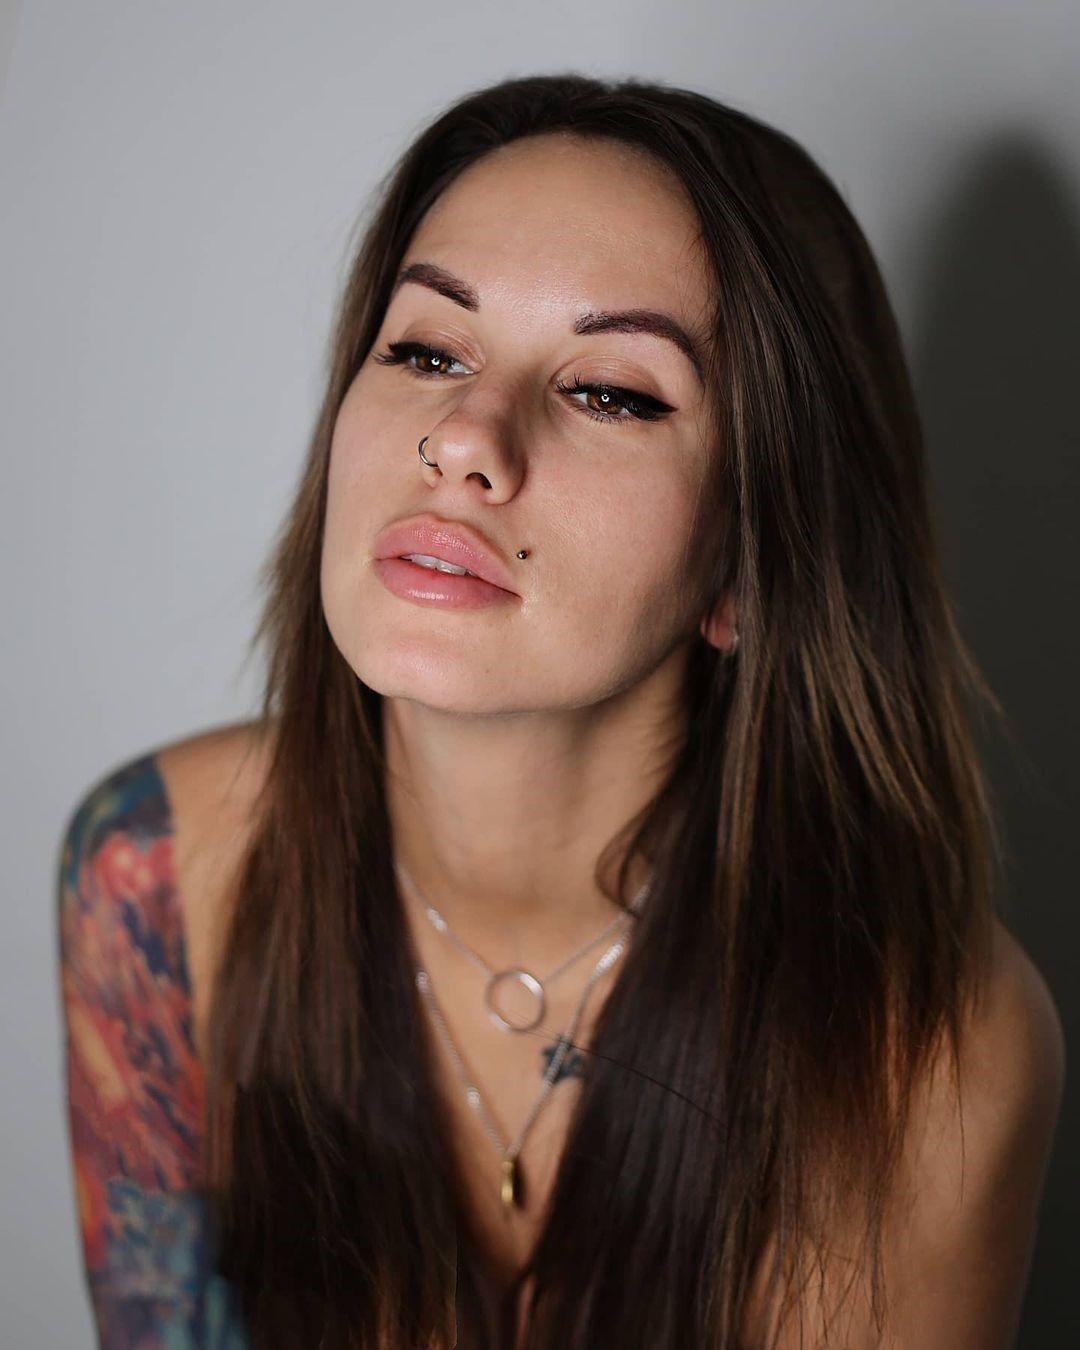 Interview with the popular tattoo artist Marina Krassovka